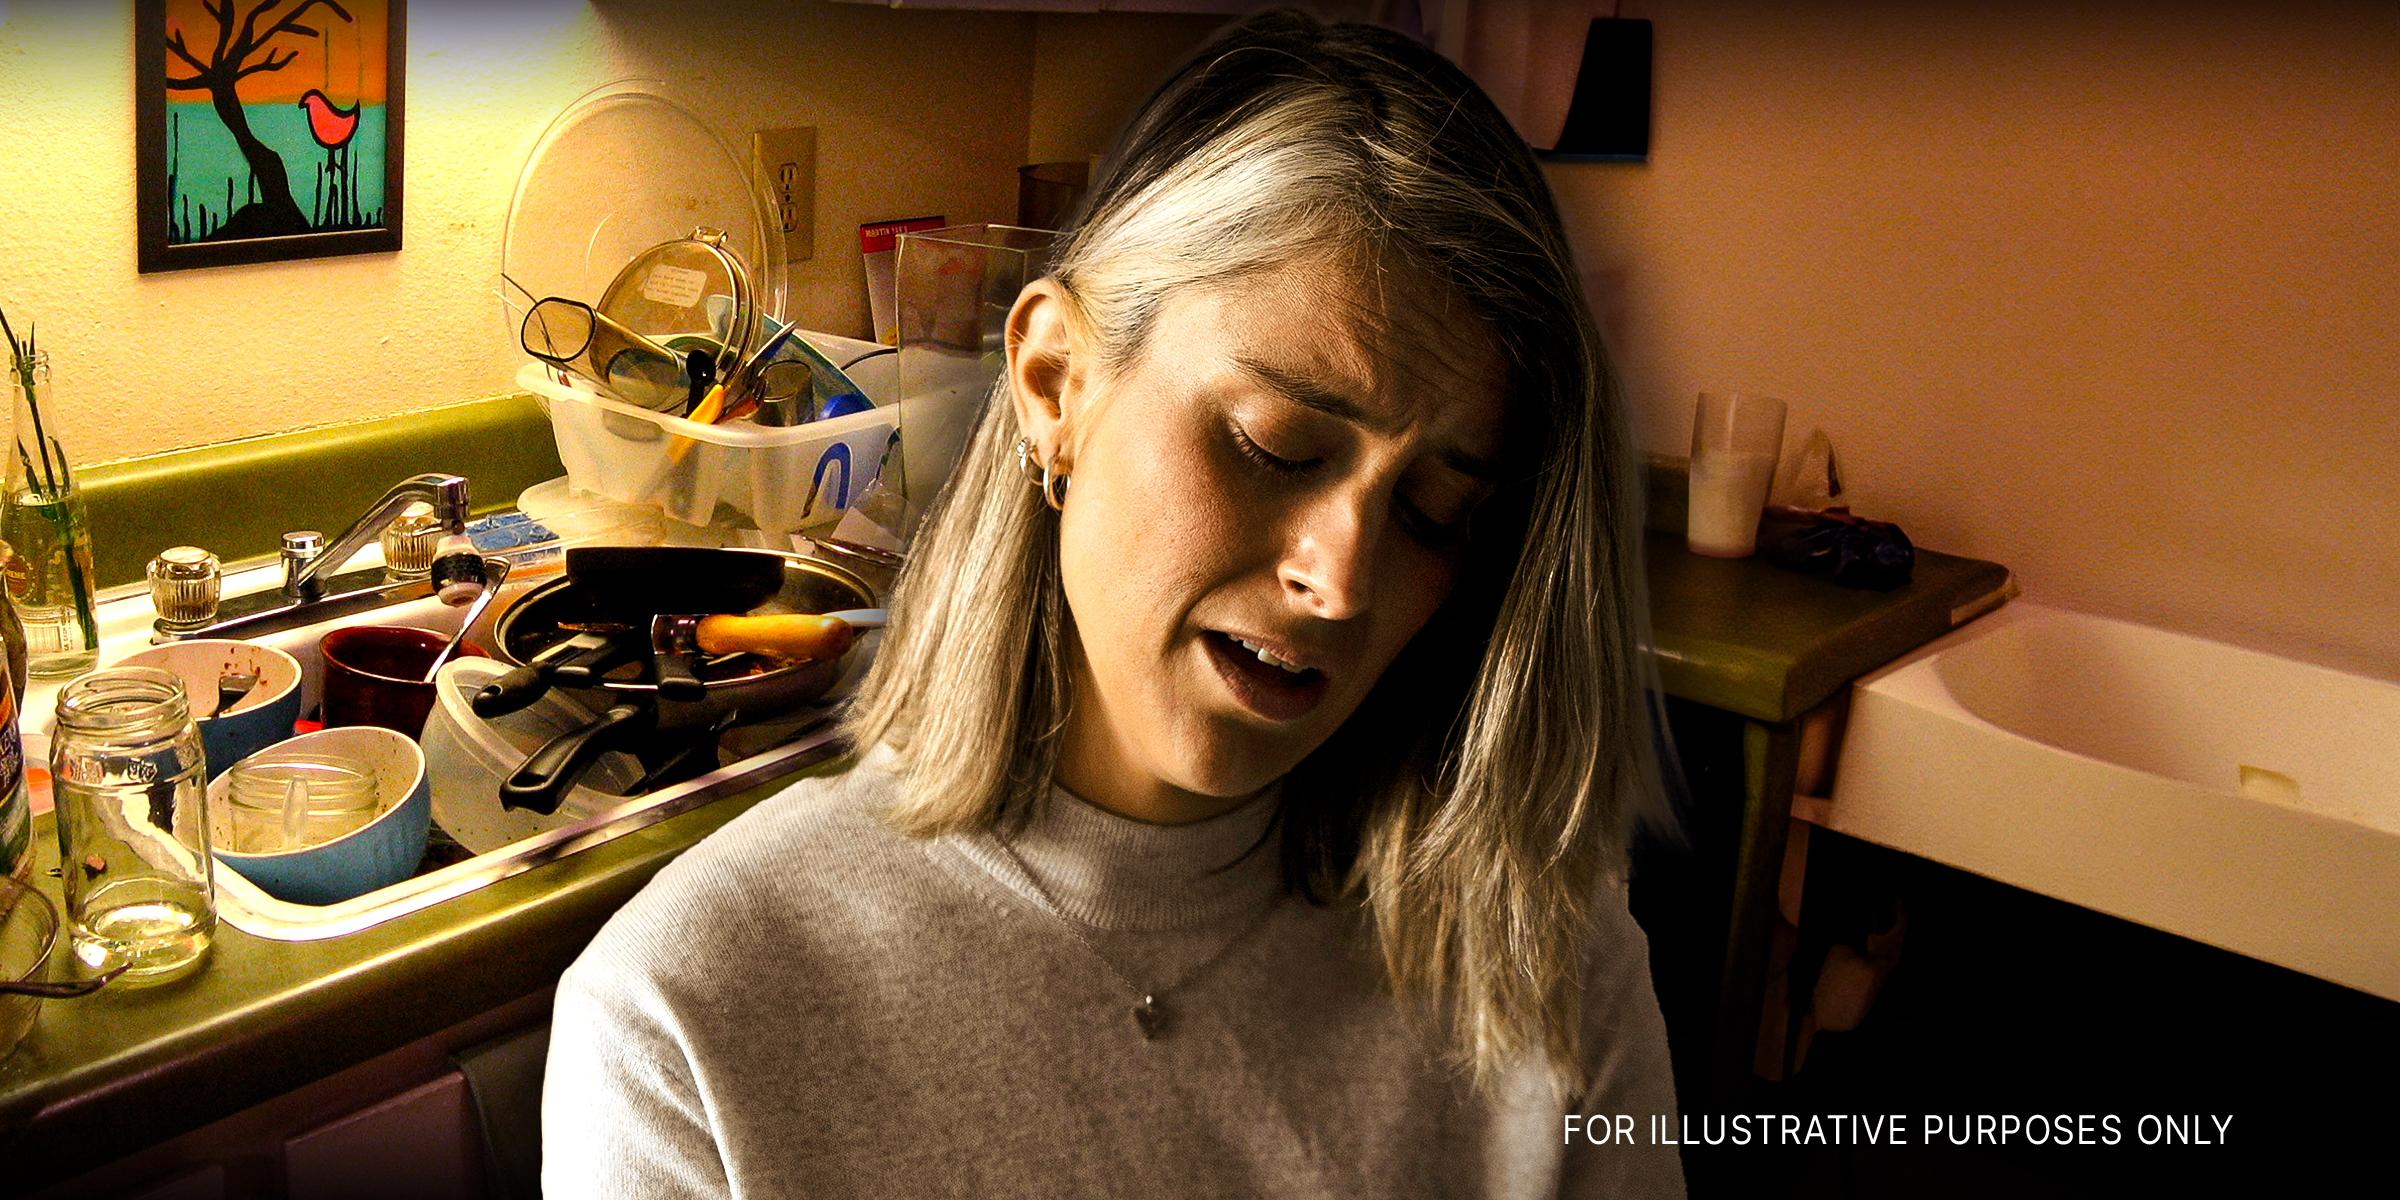 An upset woman | Source: Flickr